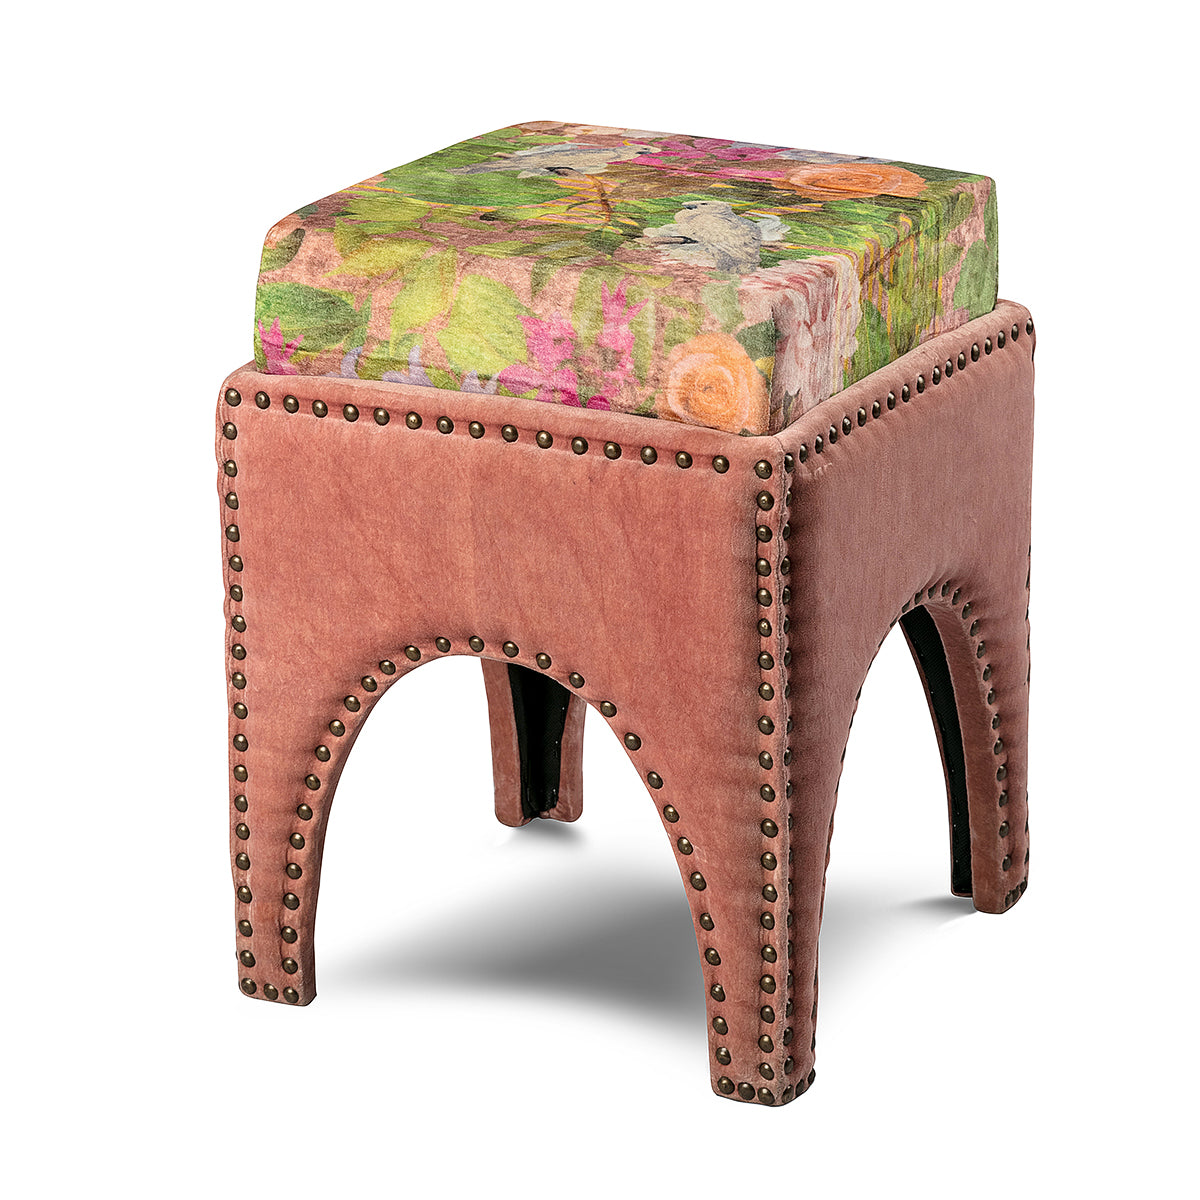 The Cockatoo Box Chair & Stool Set